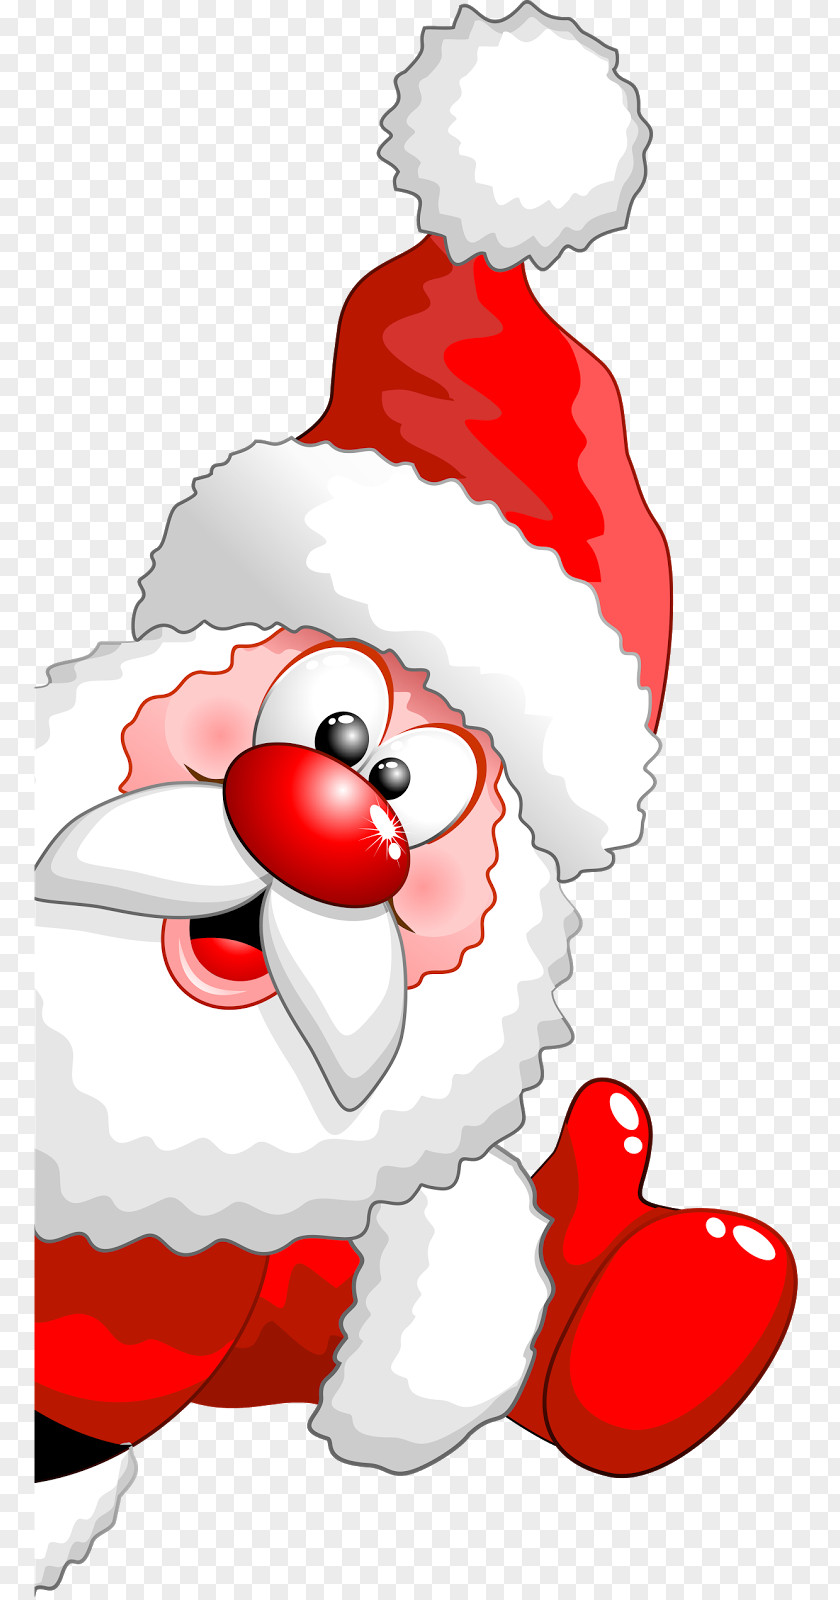 Santa Sleigh Claus Reindeer Christmas And Holiday Season Tree PNG